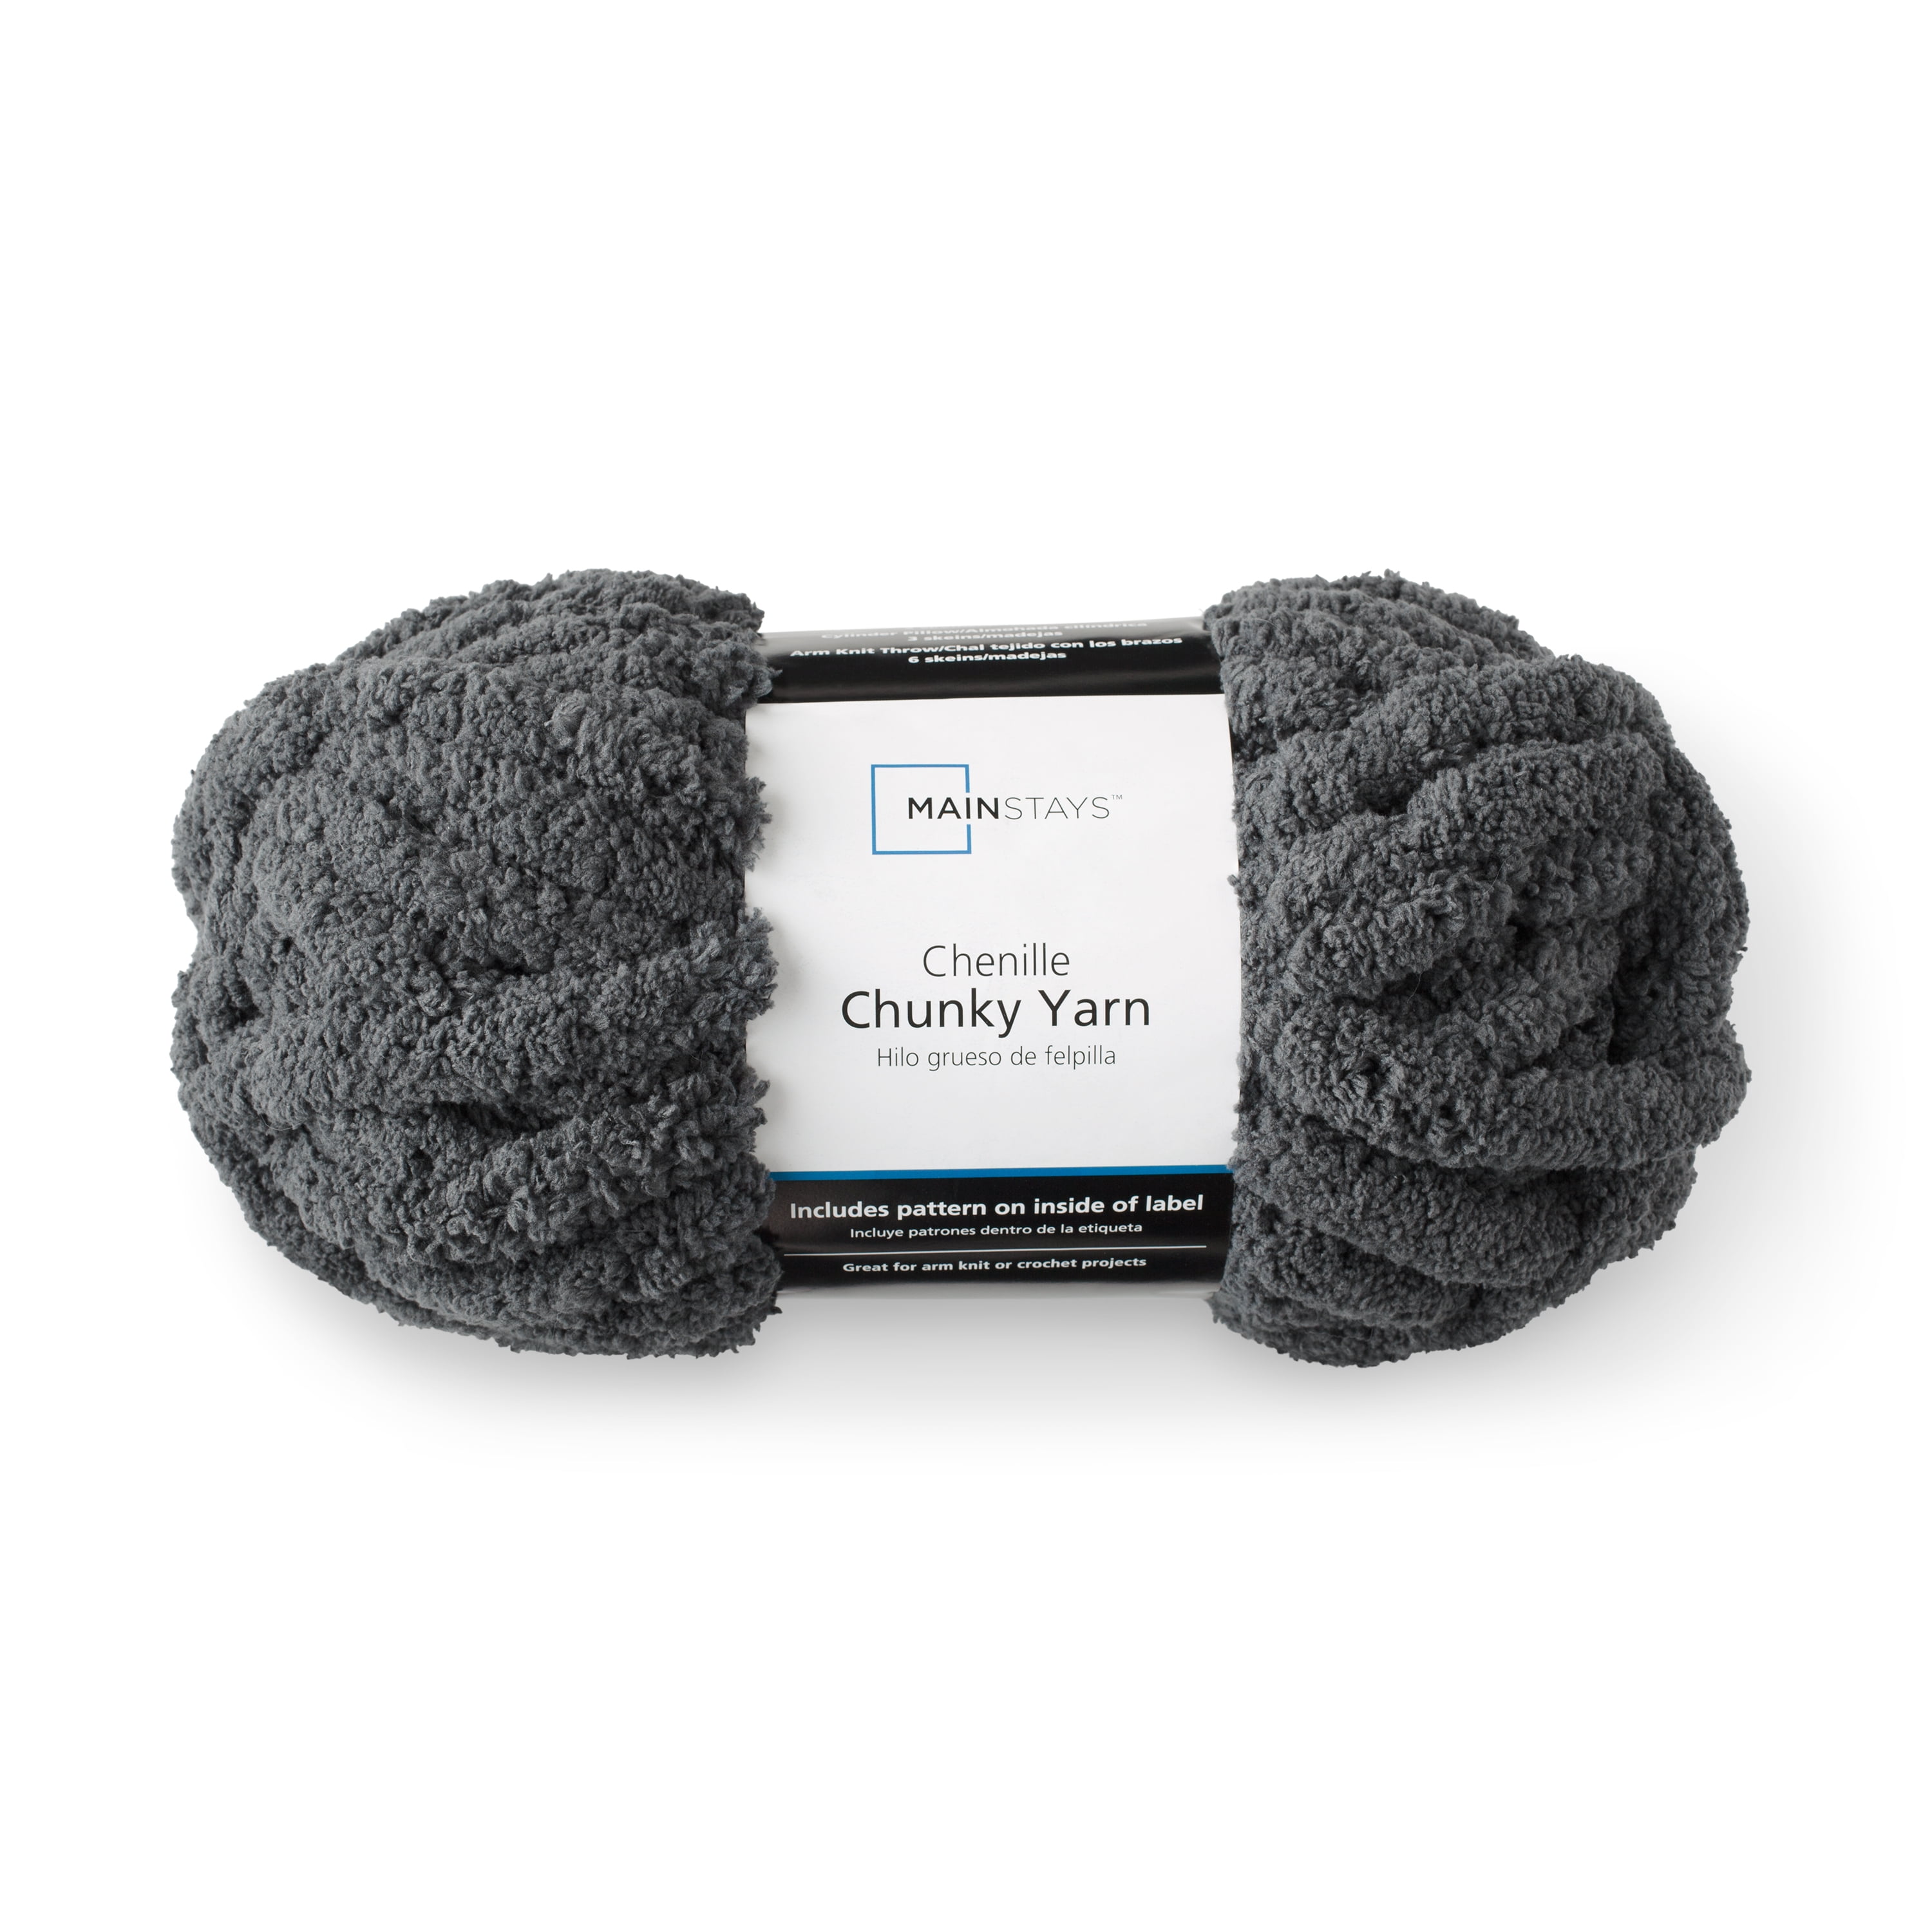  HOMBYS Navy Blue Chunky Chenille Yarn for Crocheting, Bulky  Thick Fluffy Yarn for Knitting,Super Bulky Chunky Yarn for Hand Knitting  Blanket, Soft Plush Yarn, 2 Jumbo Pack (31.7 yds,8 oz Each